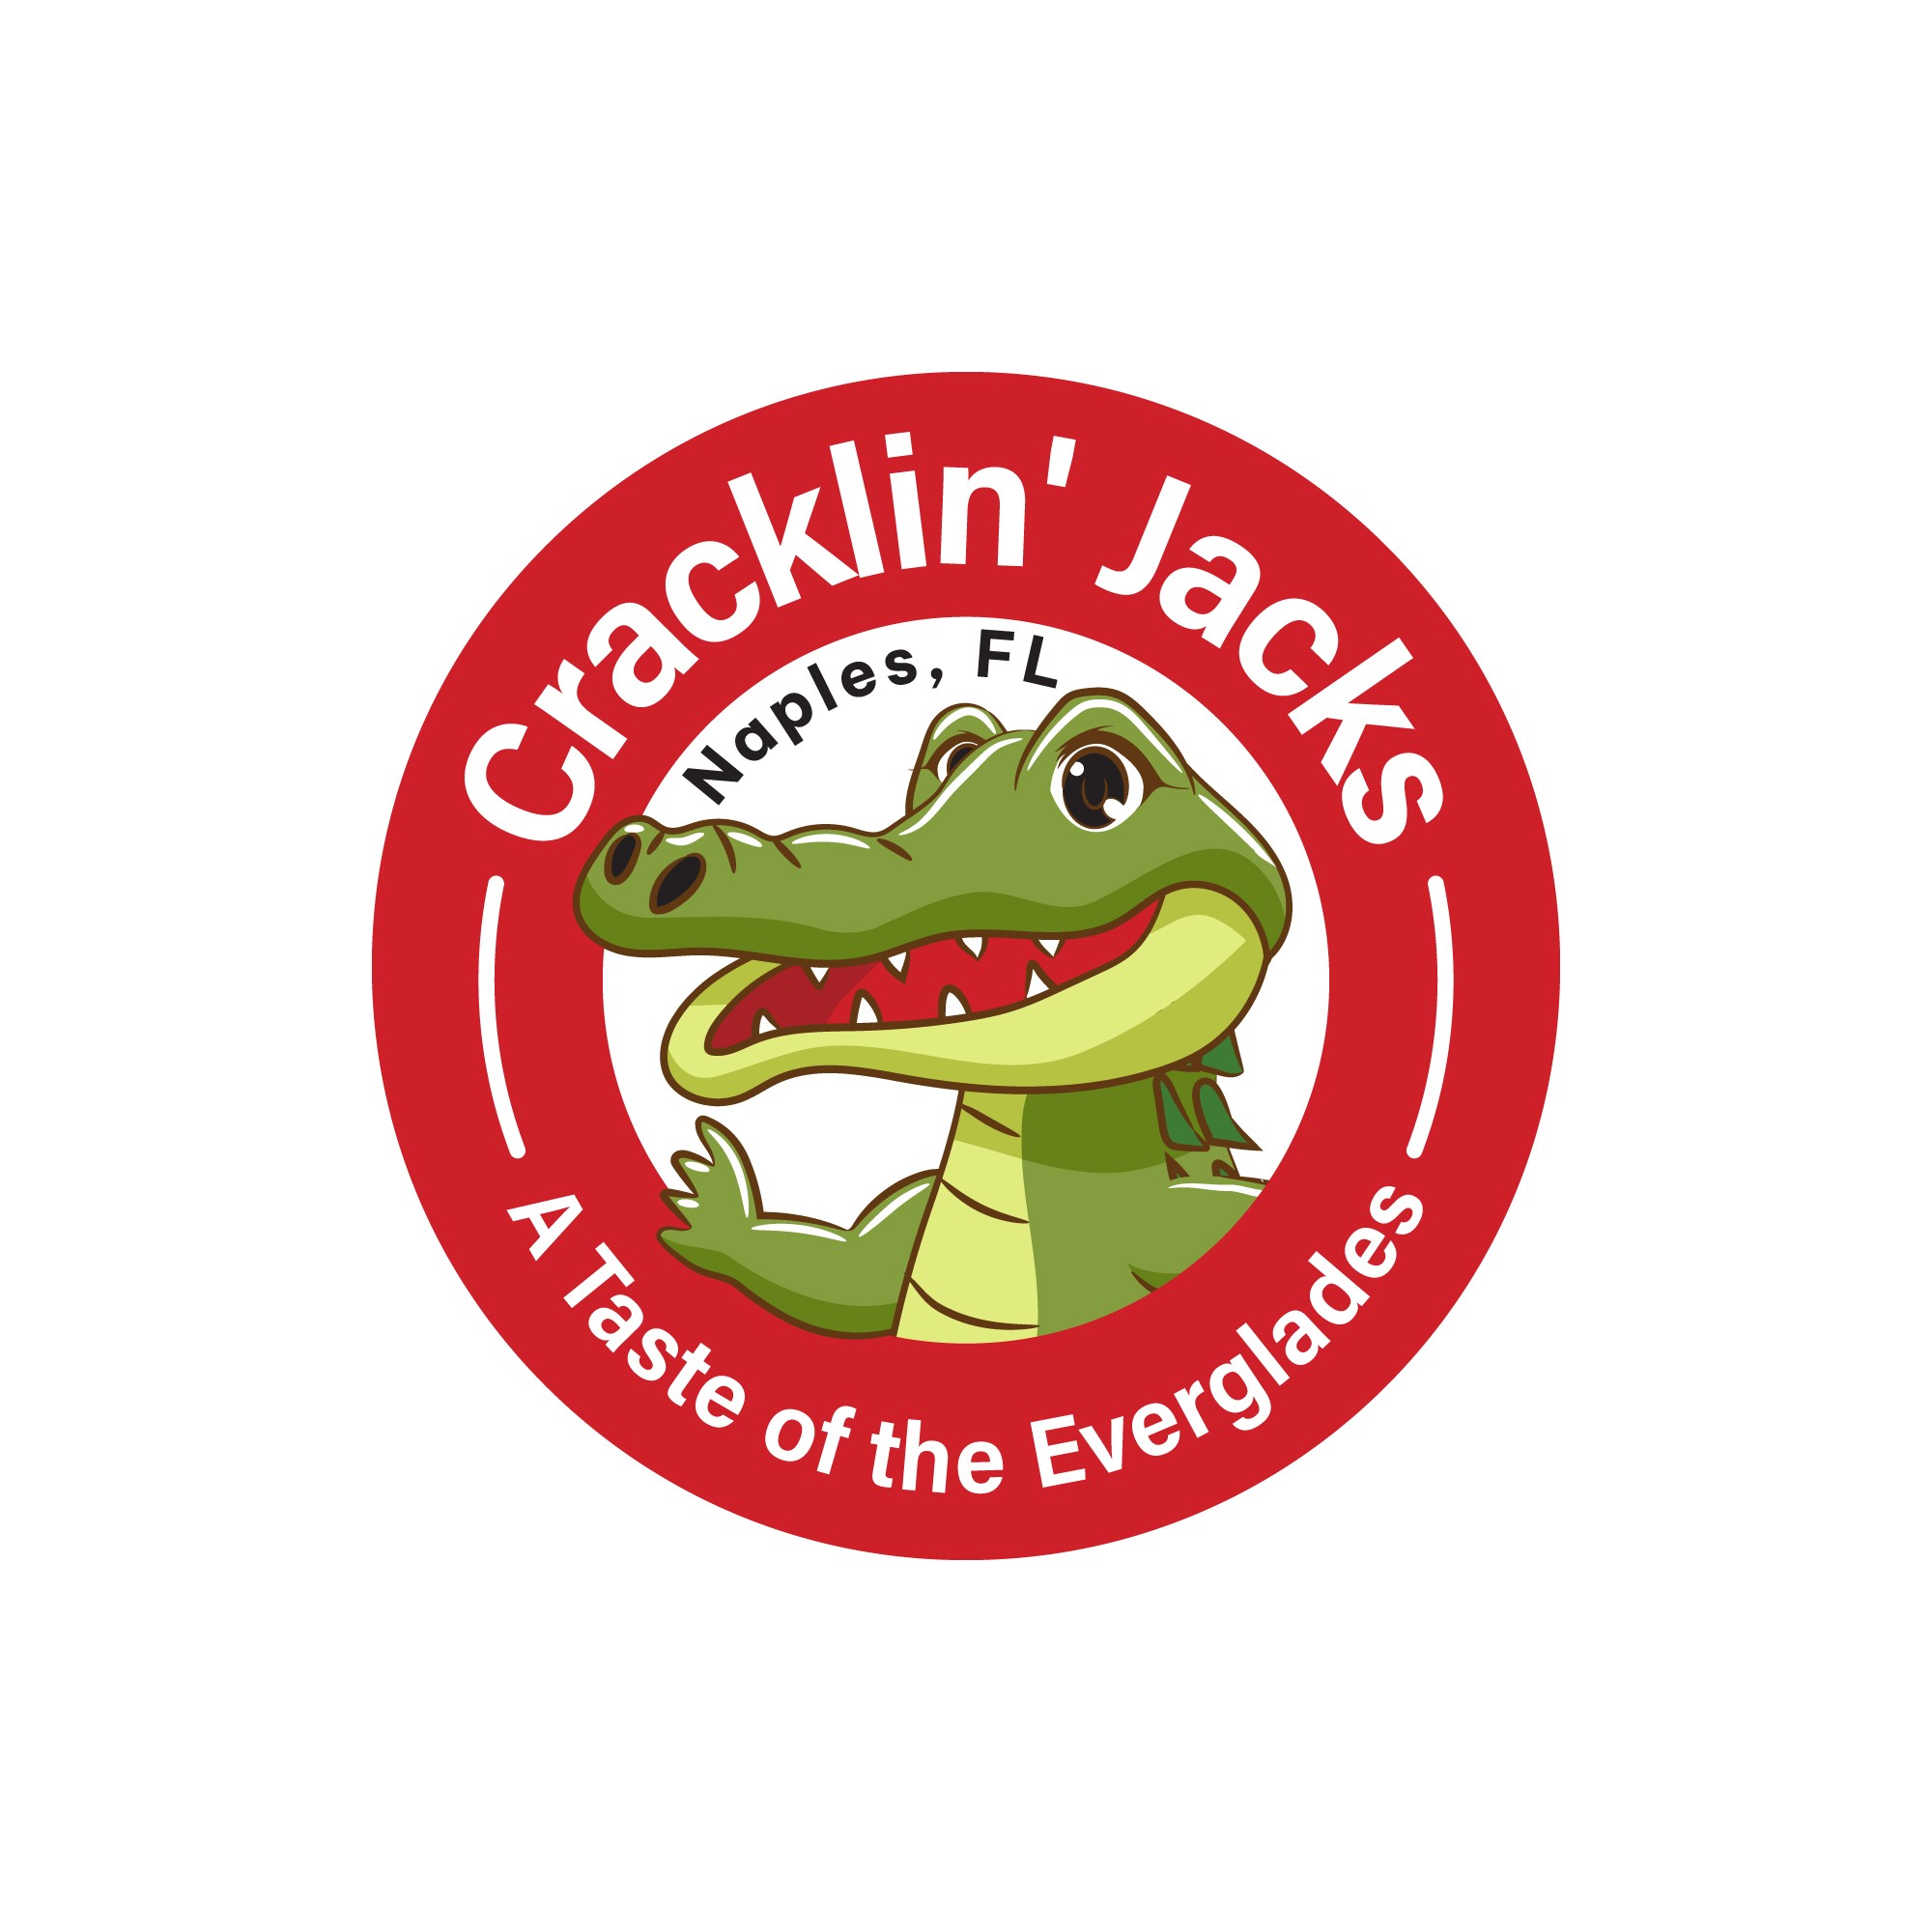 Cracklin' Jacks 